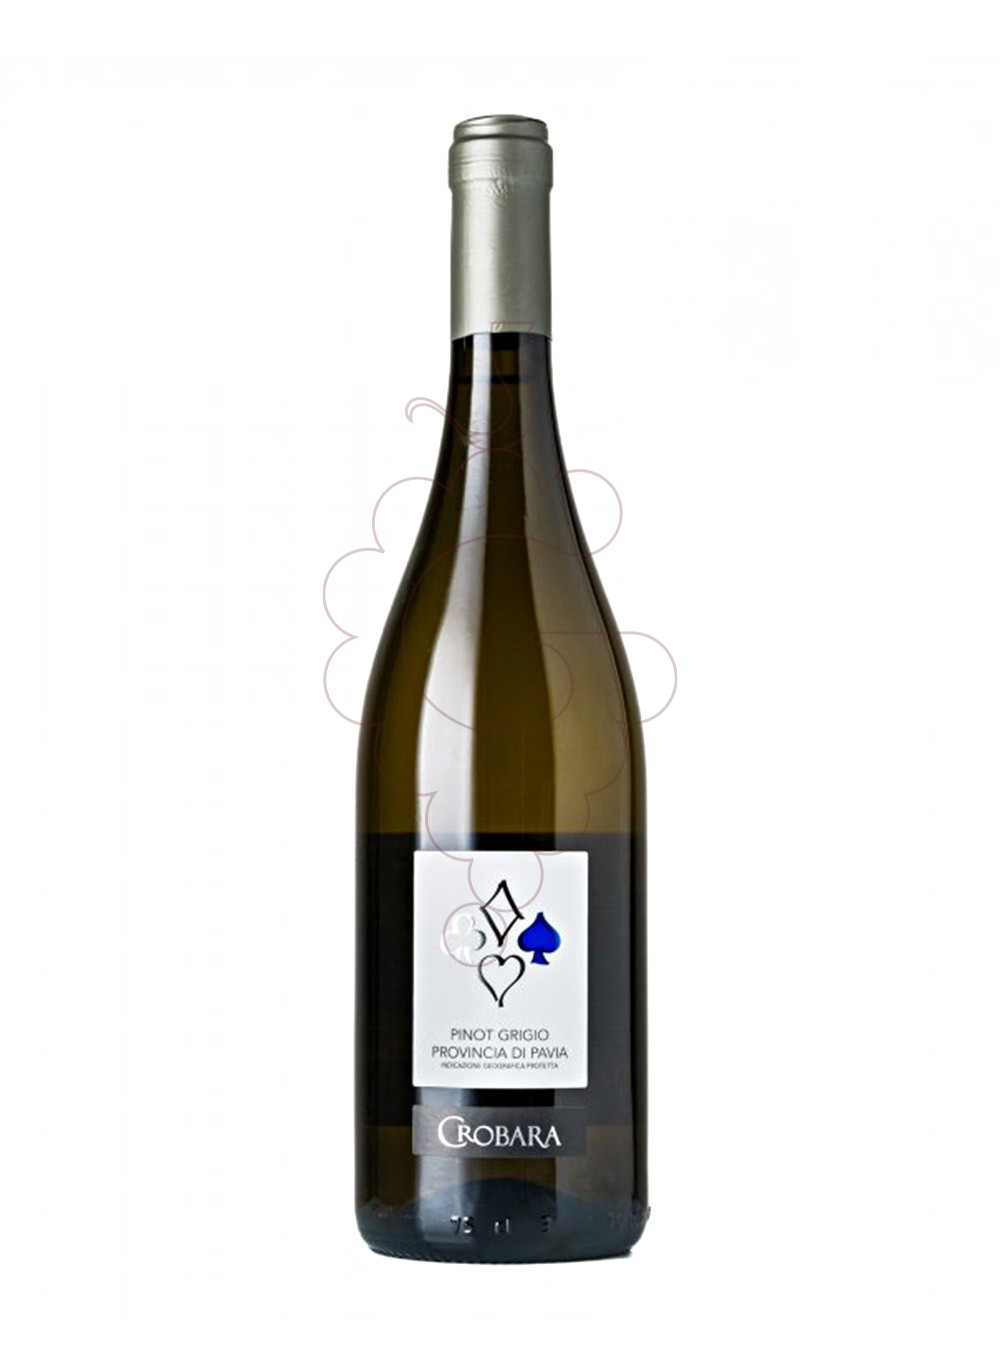 Photo Crobara pinot grigio di pavia white wine